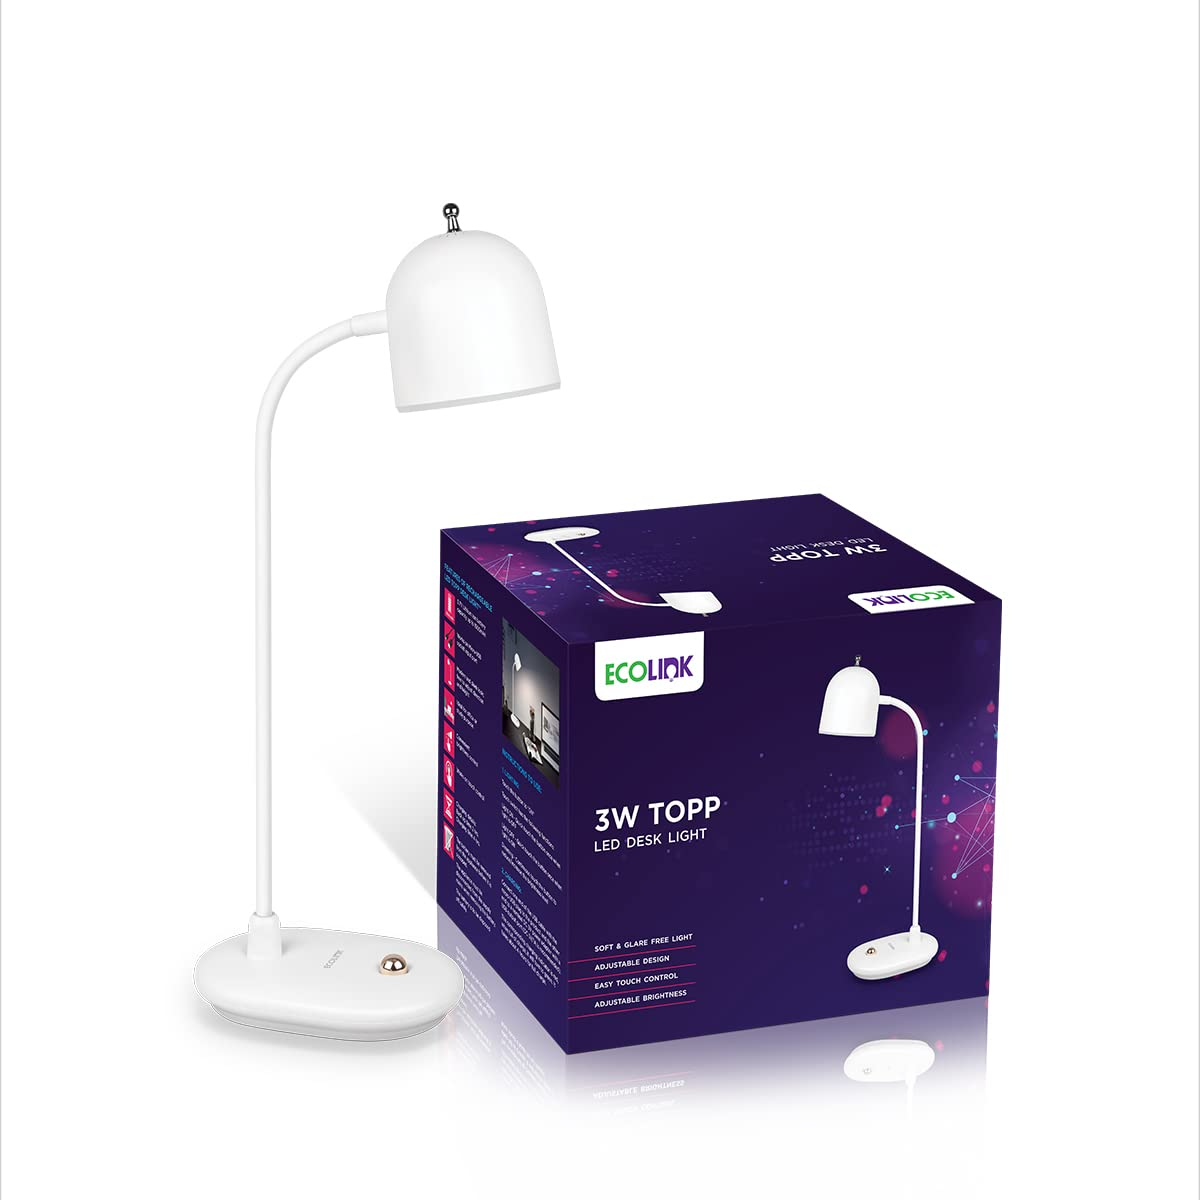 Ecolink Topp Rechargeable LED Desk Light